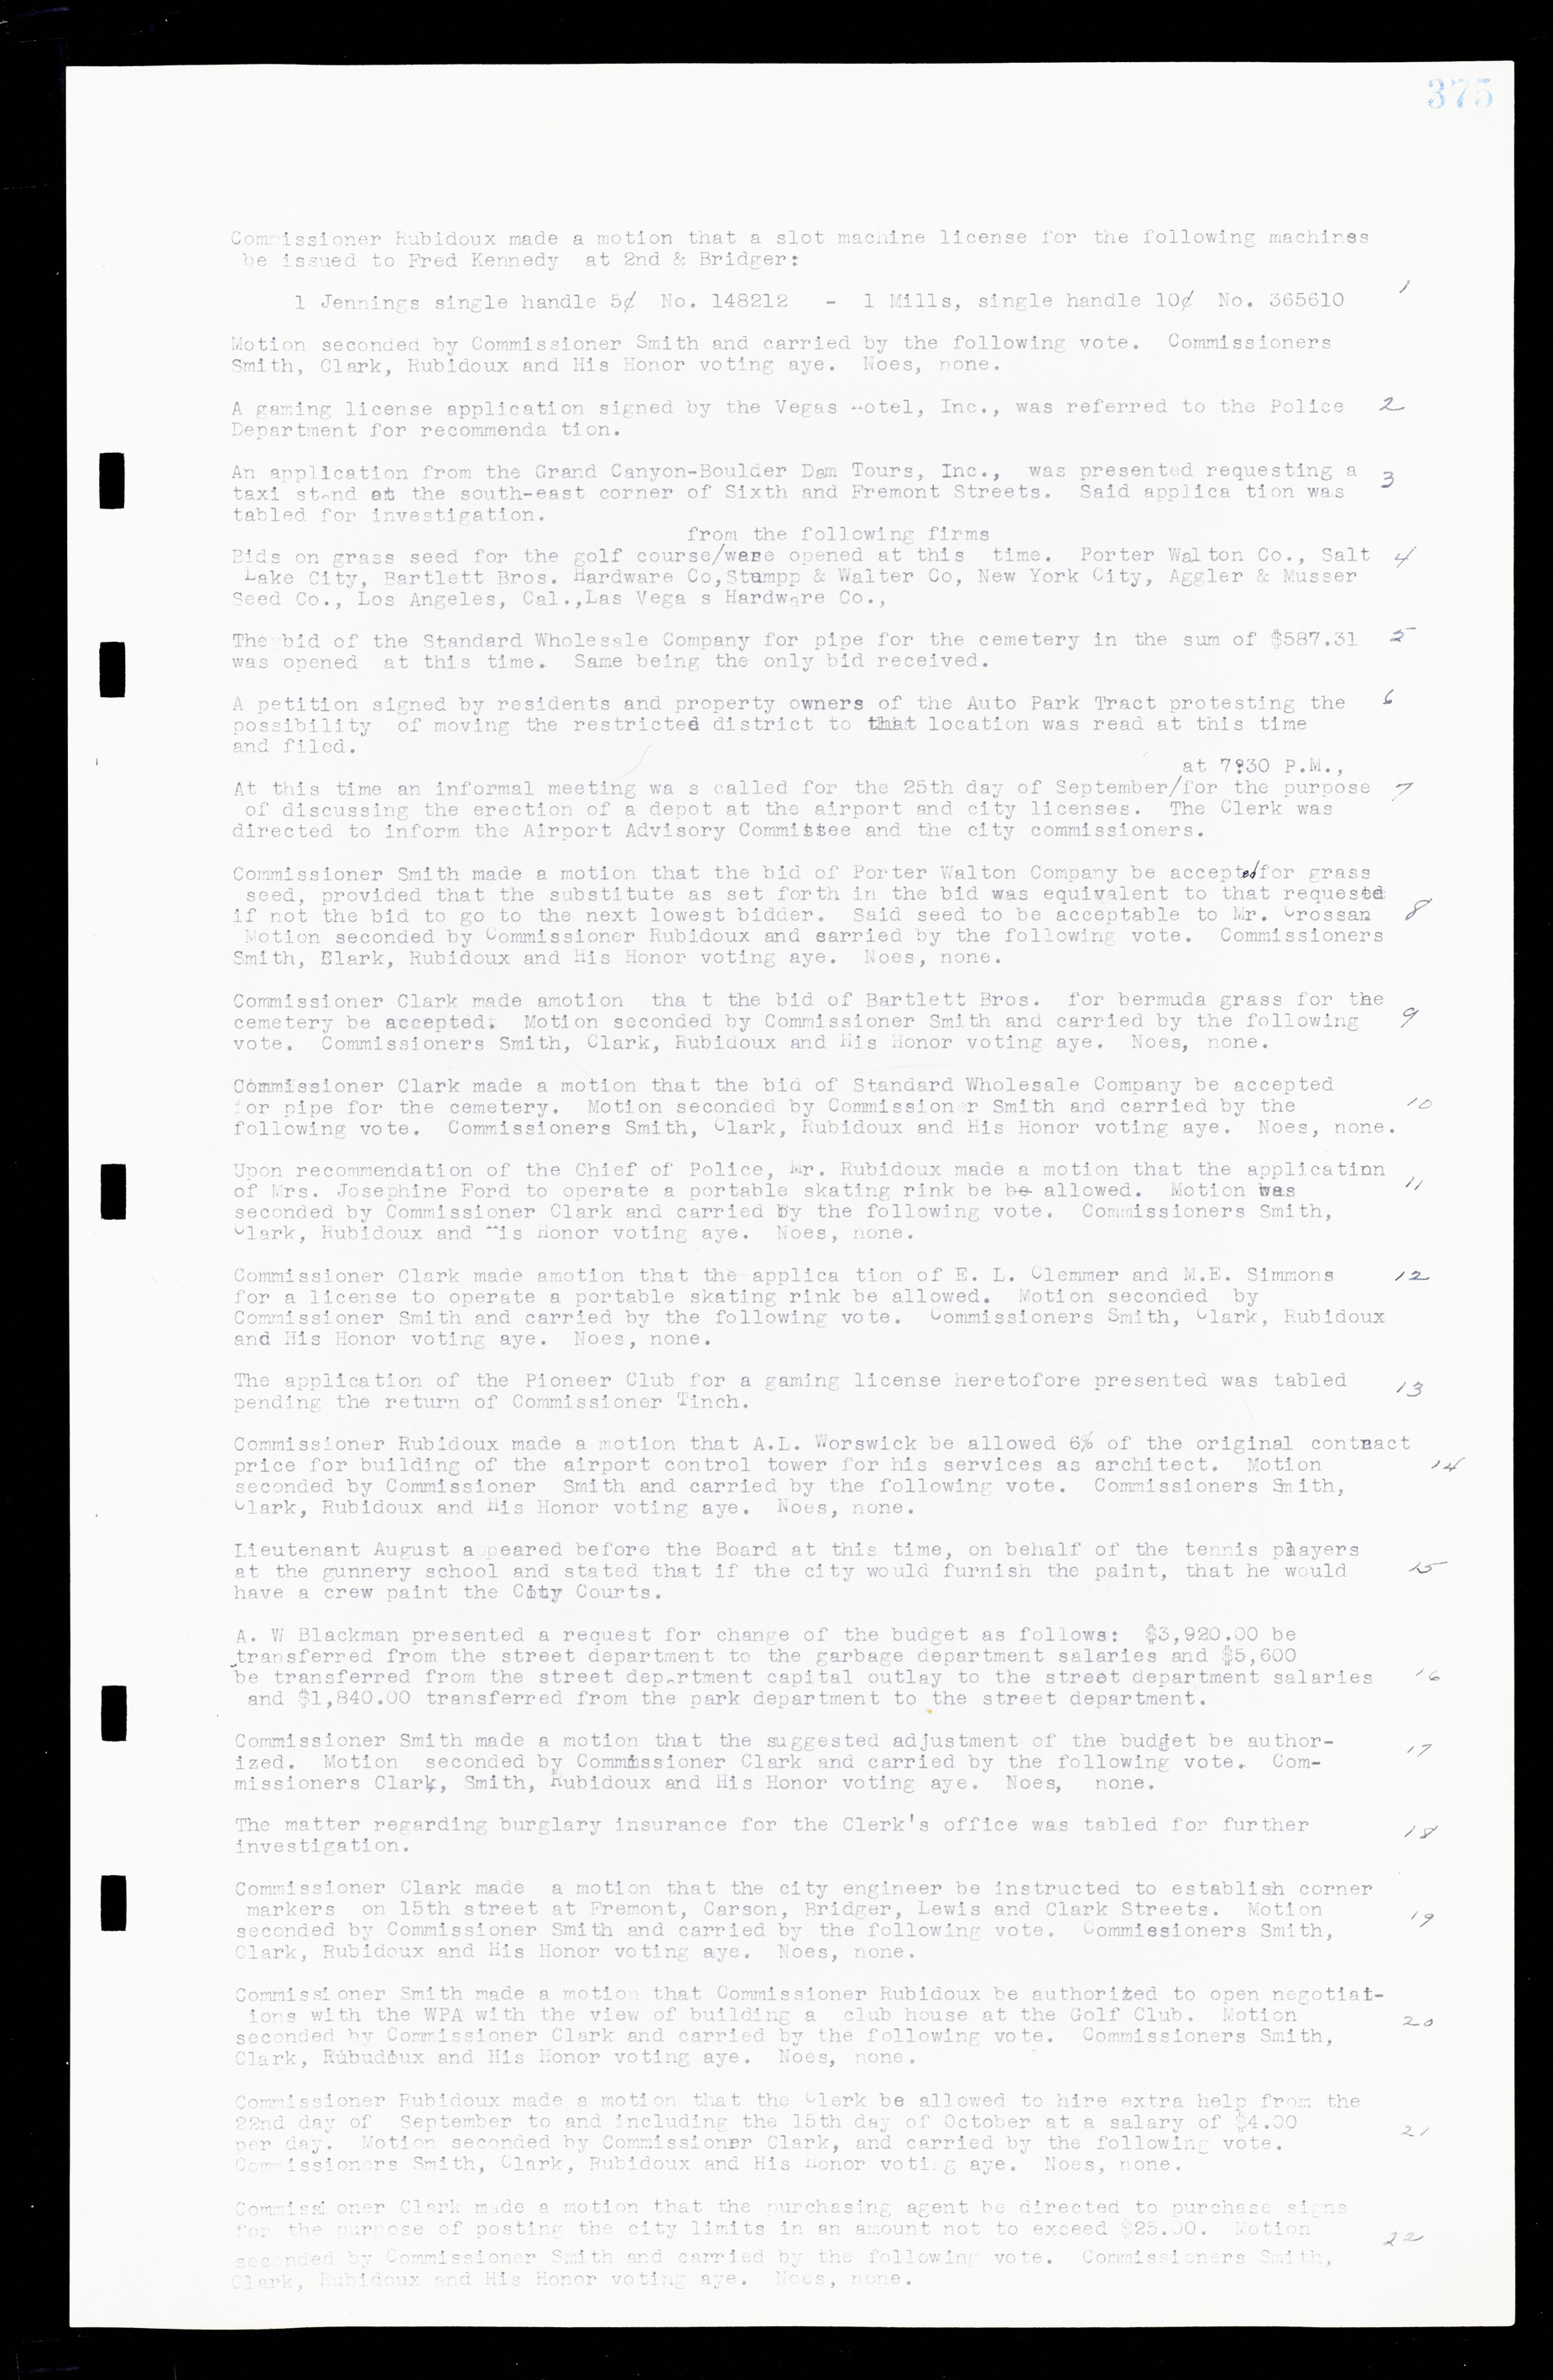 Las Vegas City Commission Minutes, February 17, 1937 to August 4, 1942, lvc000004-401